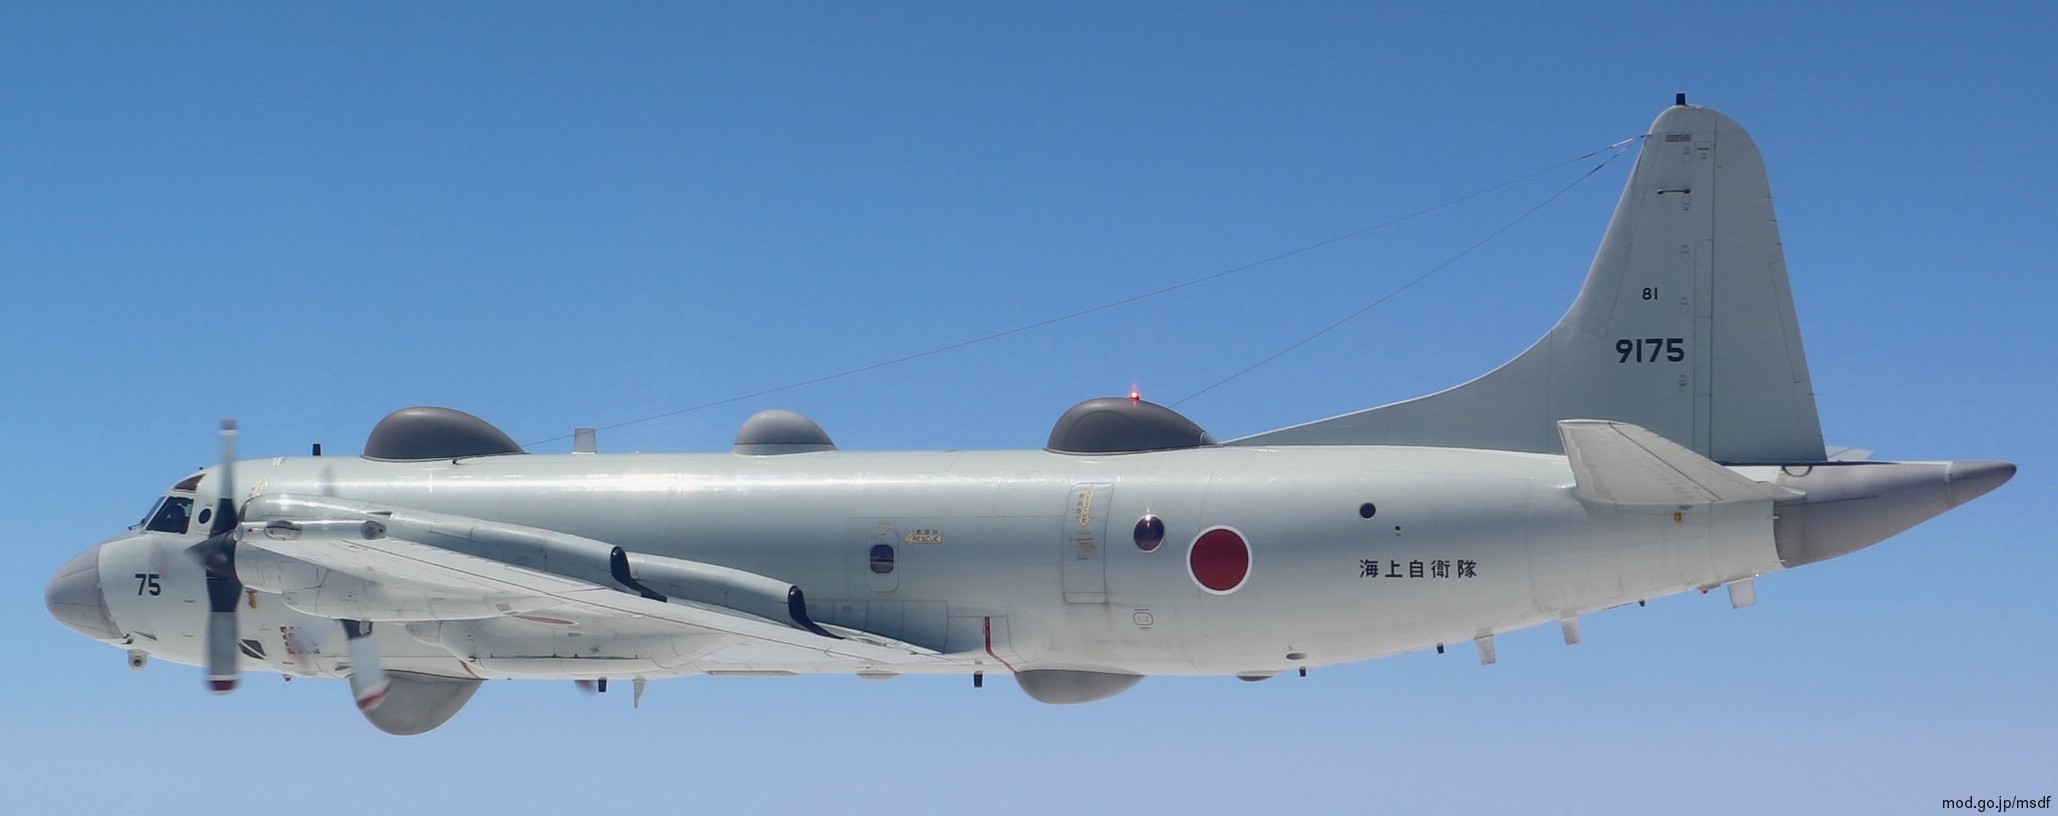 kawasaki ep-3 orion elint patrol aircraft mpa japan maritime self defense force jmsdf 9175 05